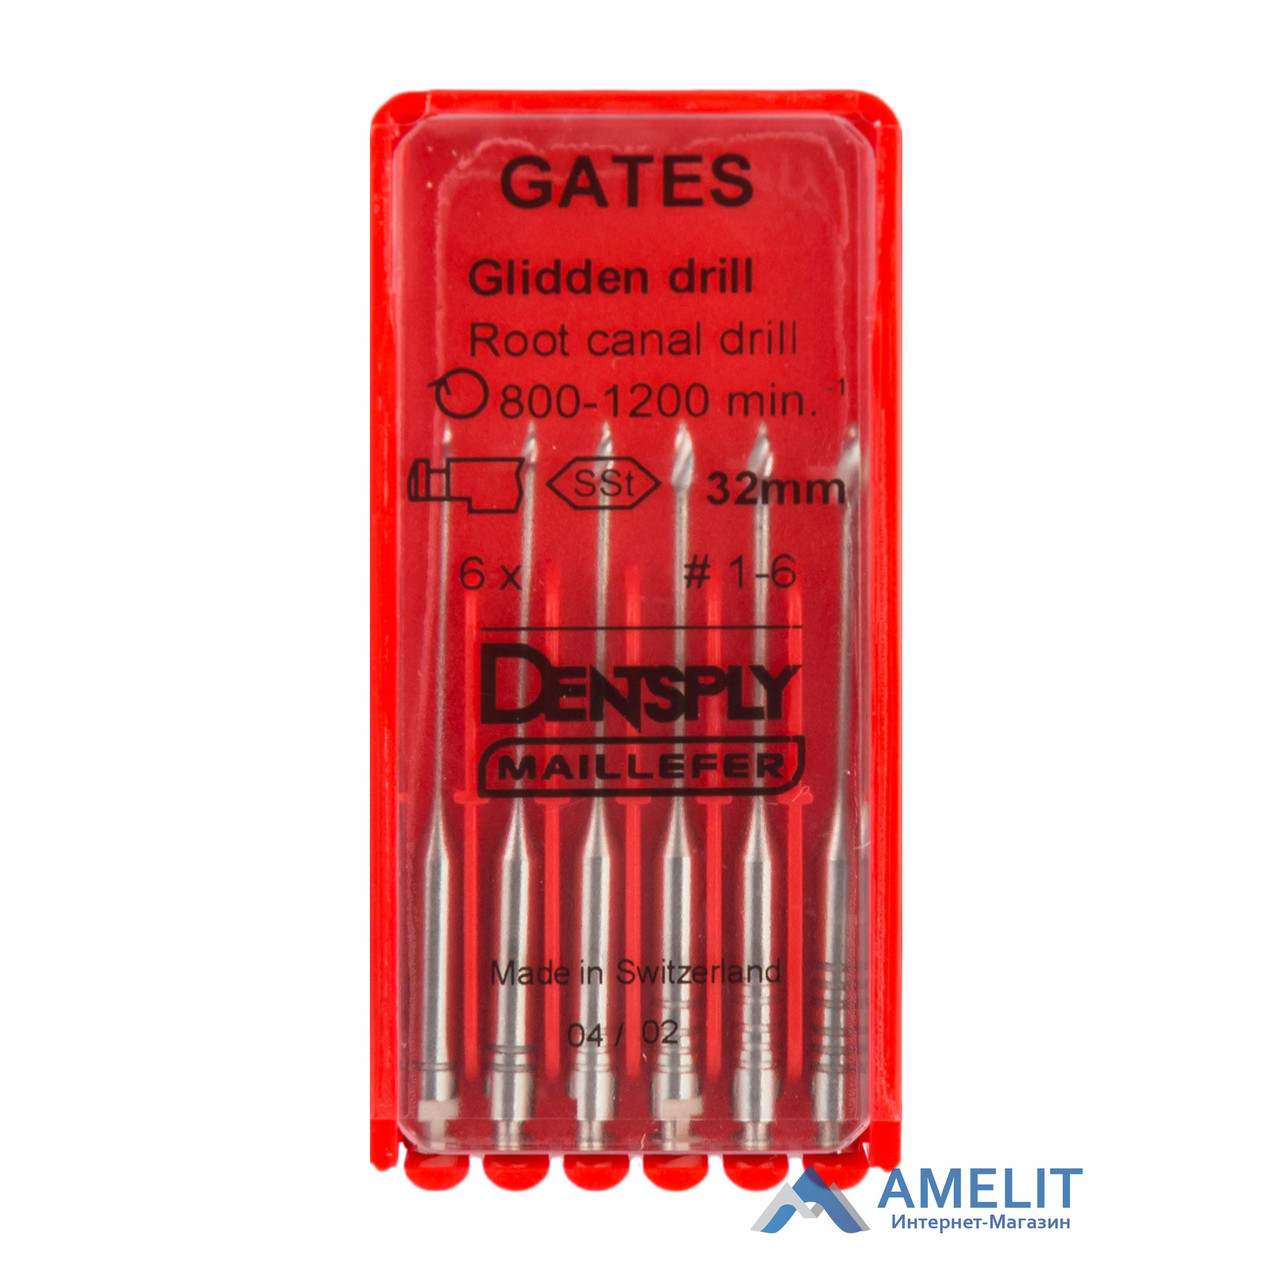 Гейтс №6 (Gates, Dentsply Maillefer), 32мм, 6шт./уп.